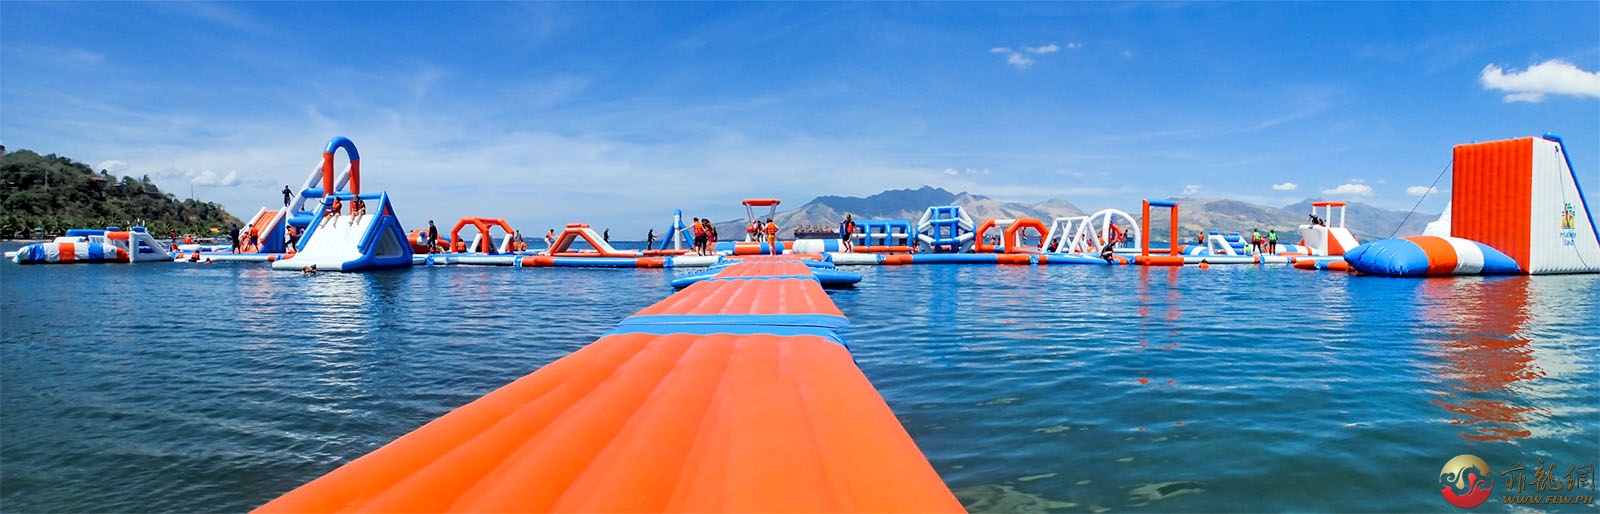 Inflatable Island Panorama.jpg